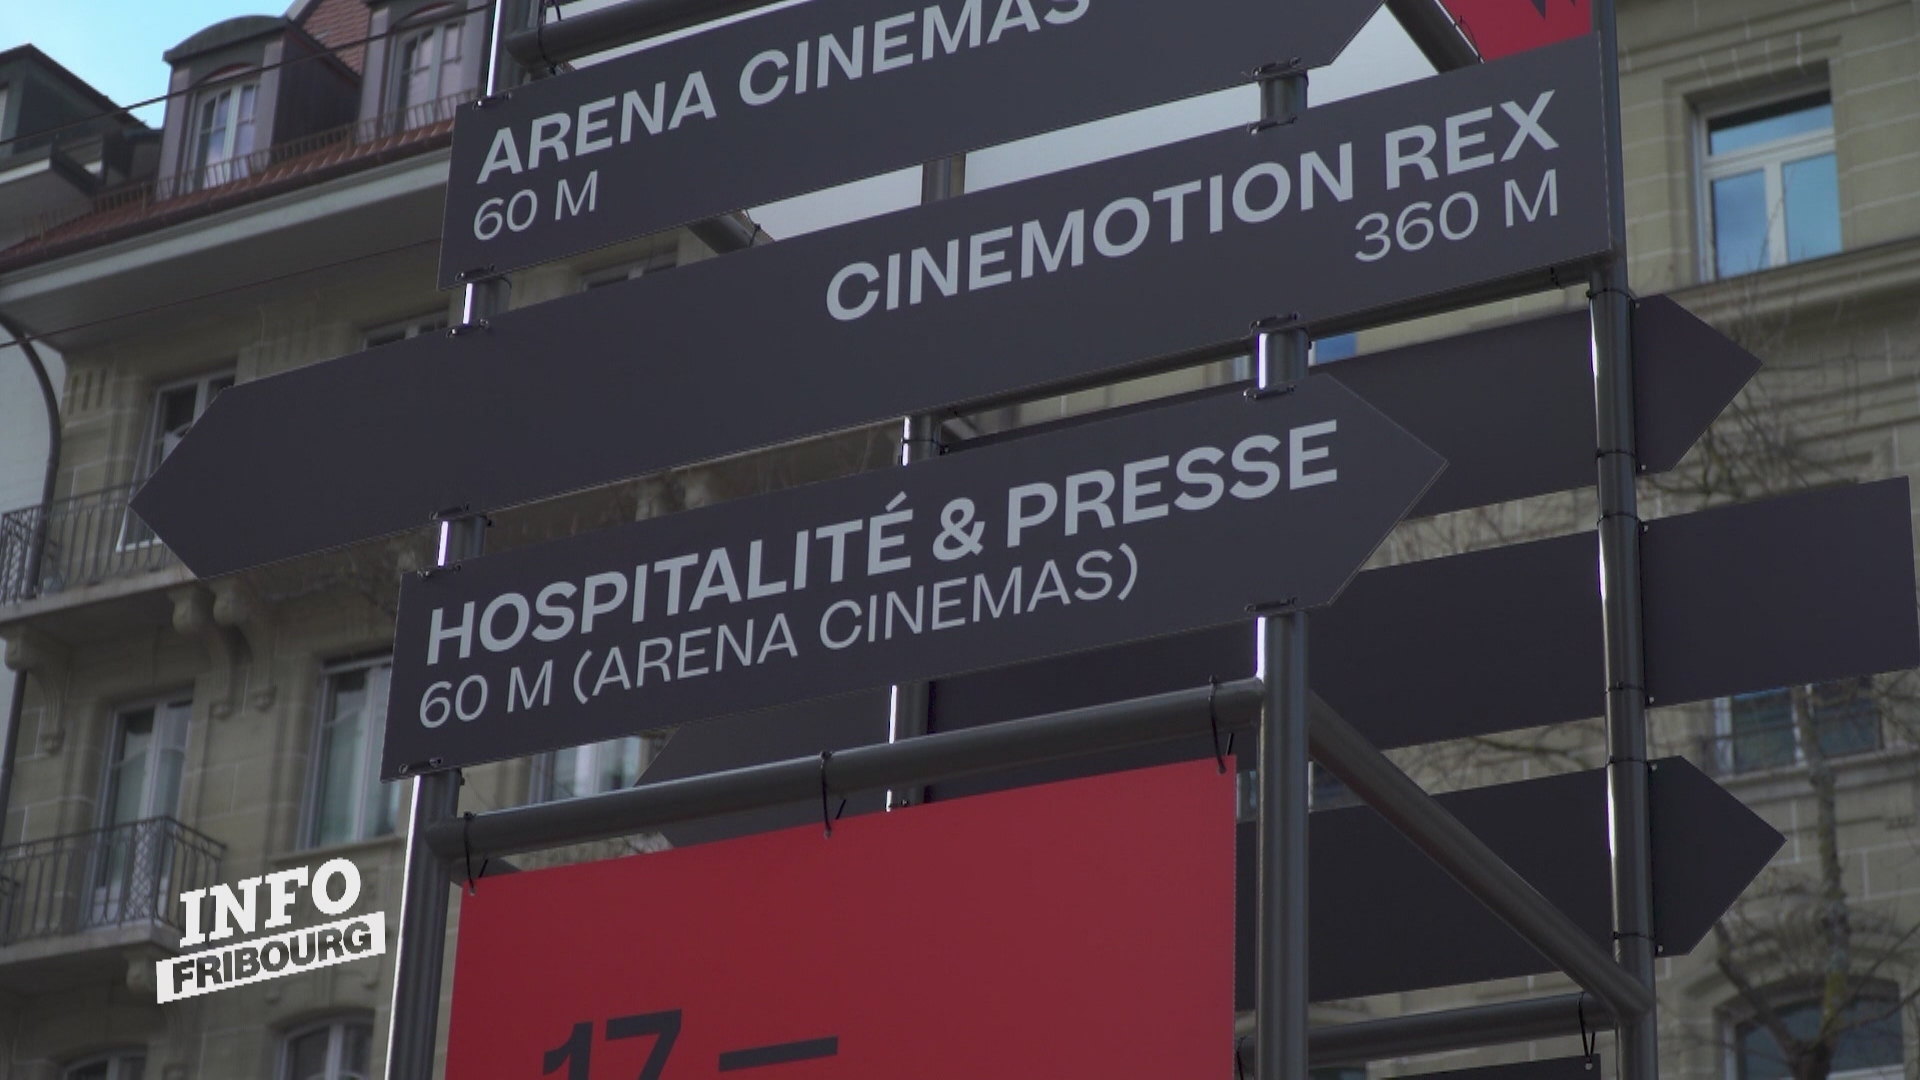 Arena Cinemas Fribourg